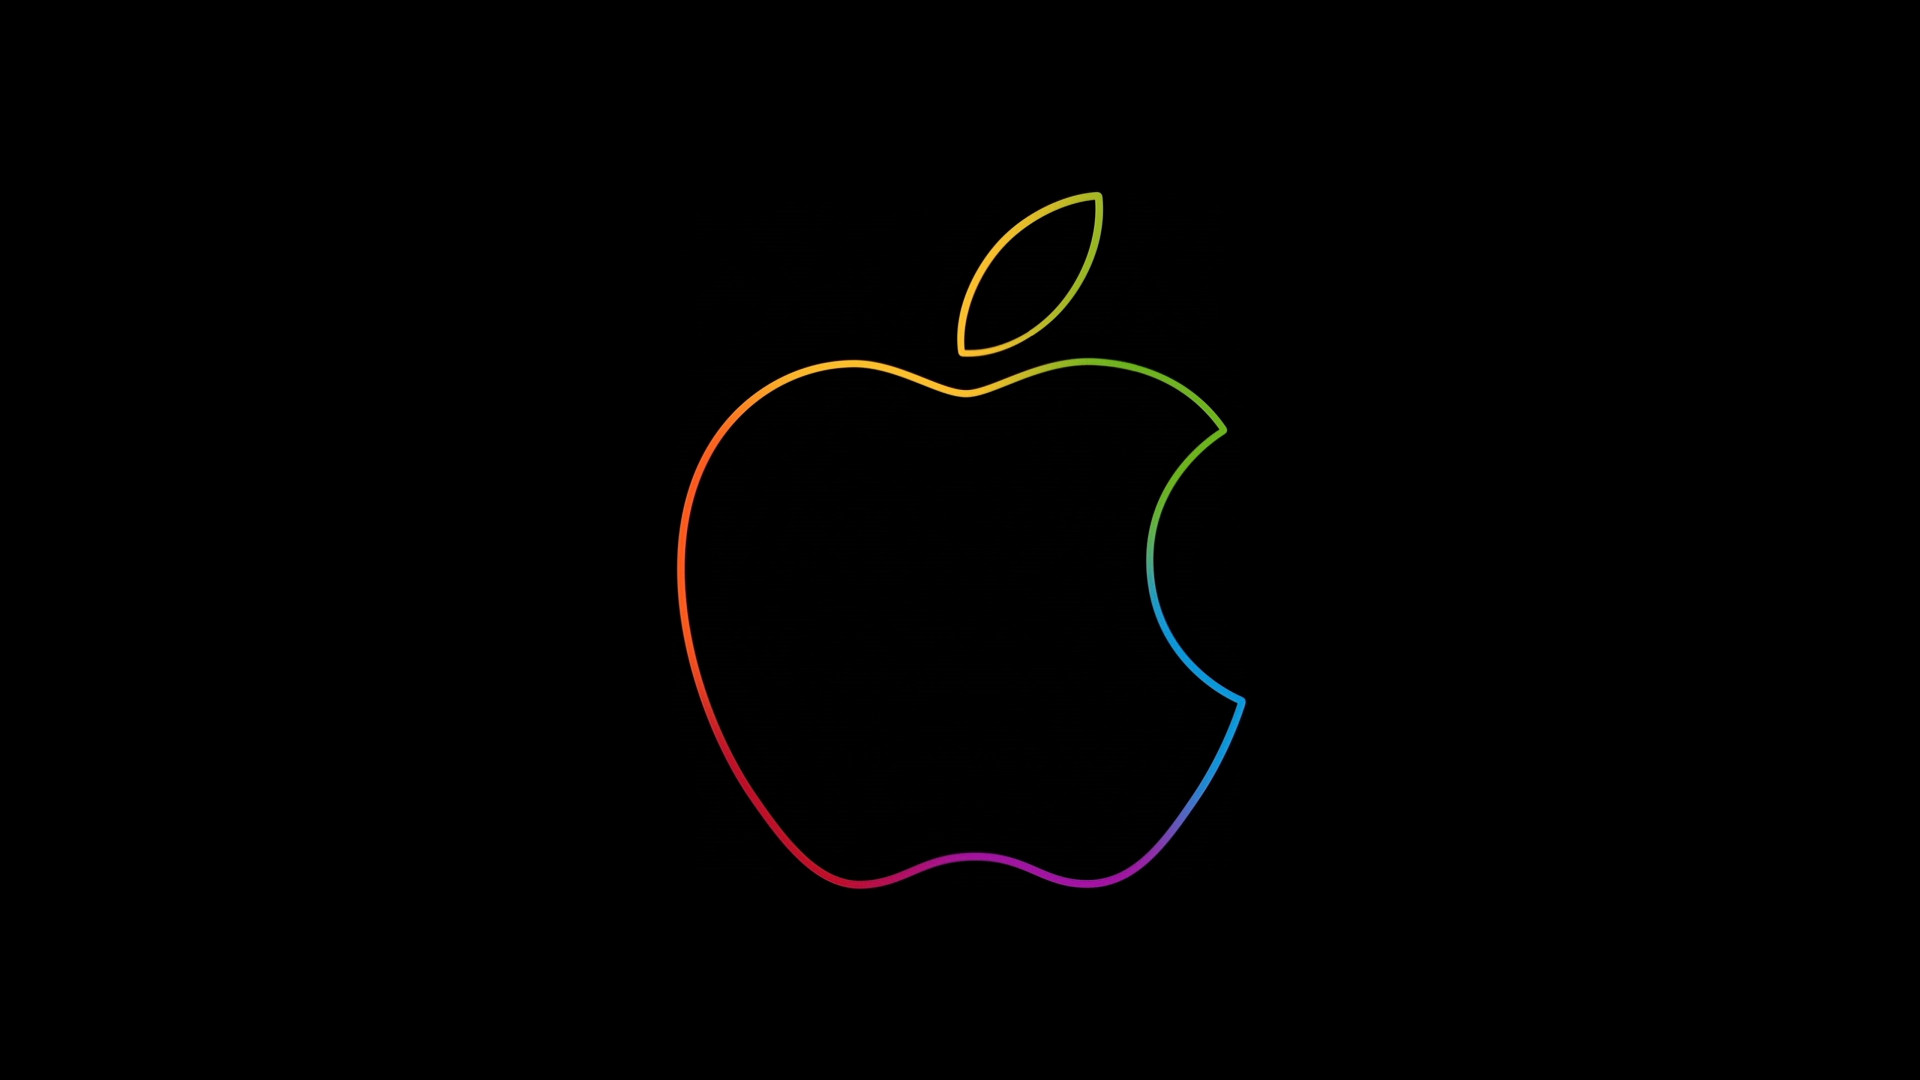 The famous Apple logo wallpaper 1920x1080